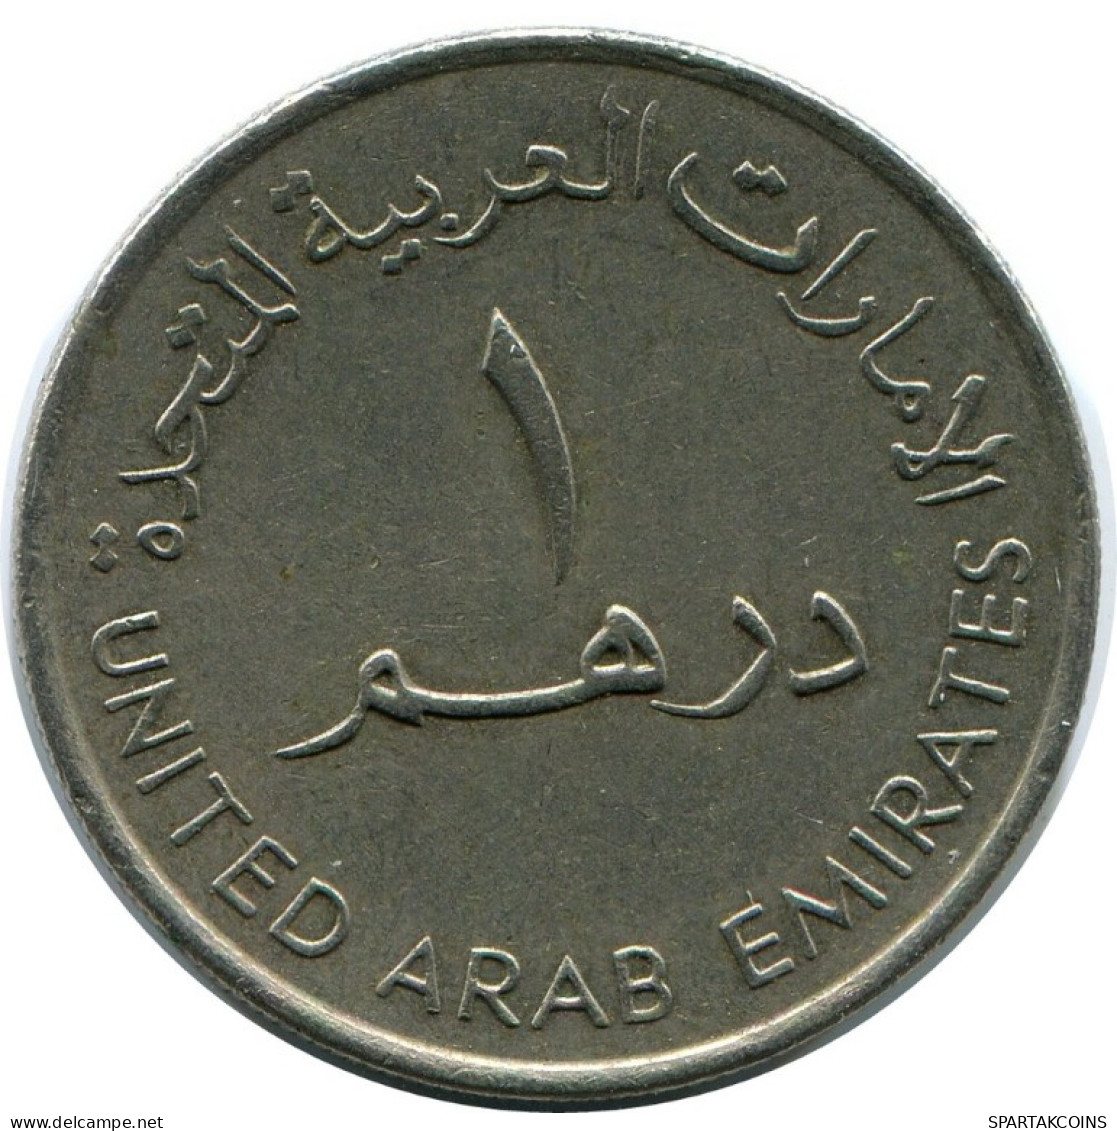 1 DIRHAM 1995 UAE UNITED ARAB EMIRATES Islámico Moneda #AK160.E.A - United Arab Emirates